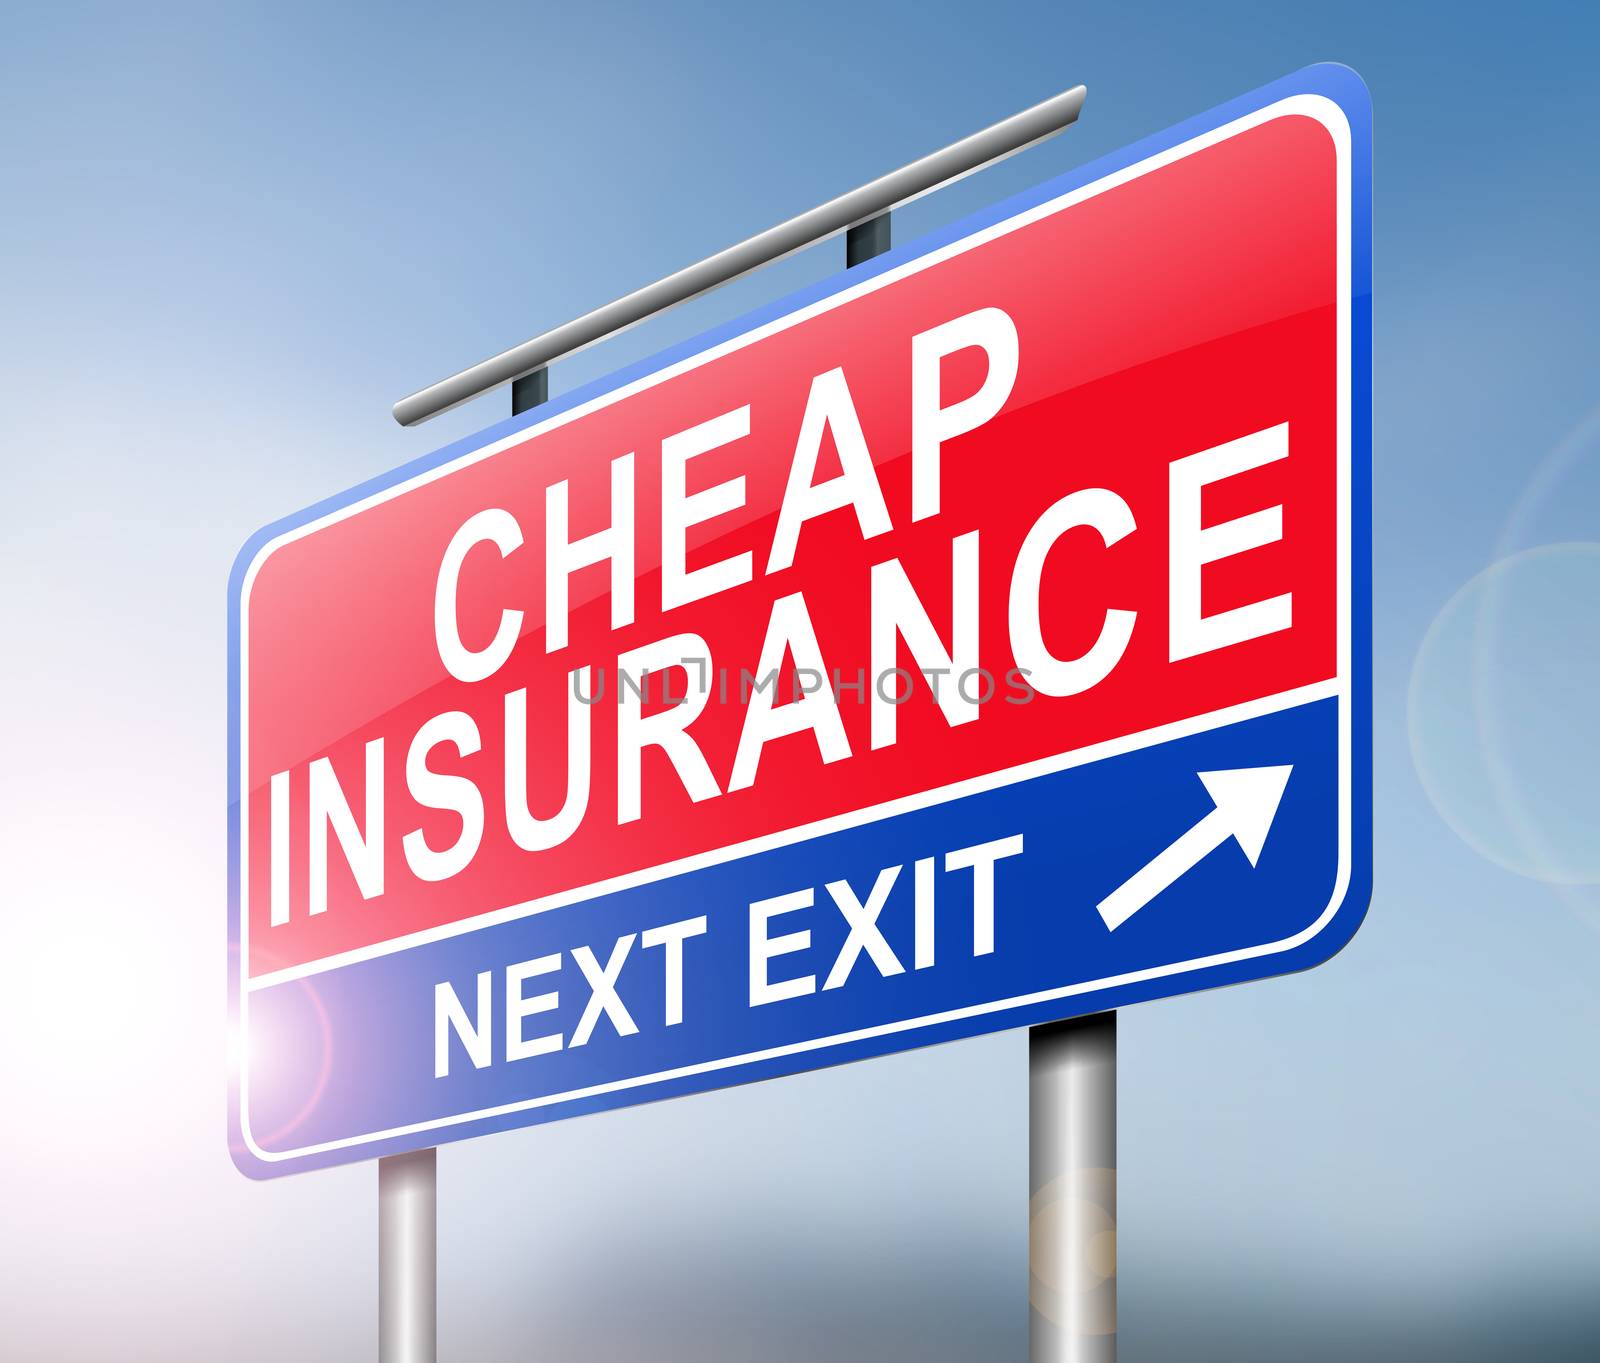 Cheap insurance concept. by 72soul